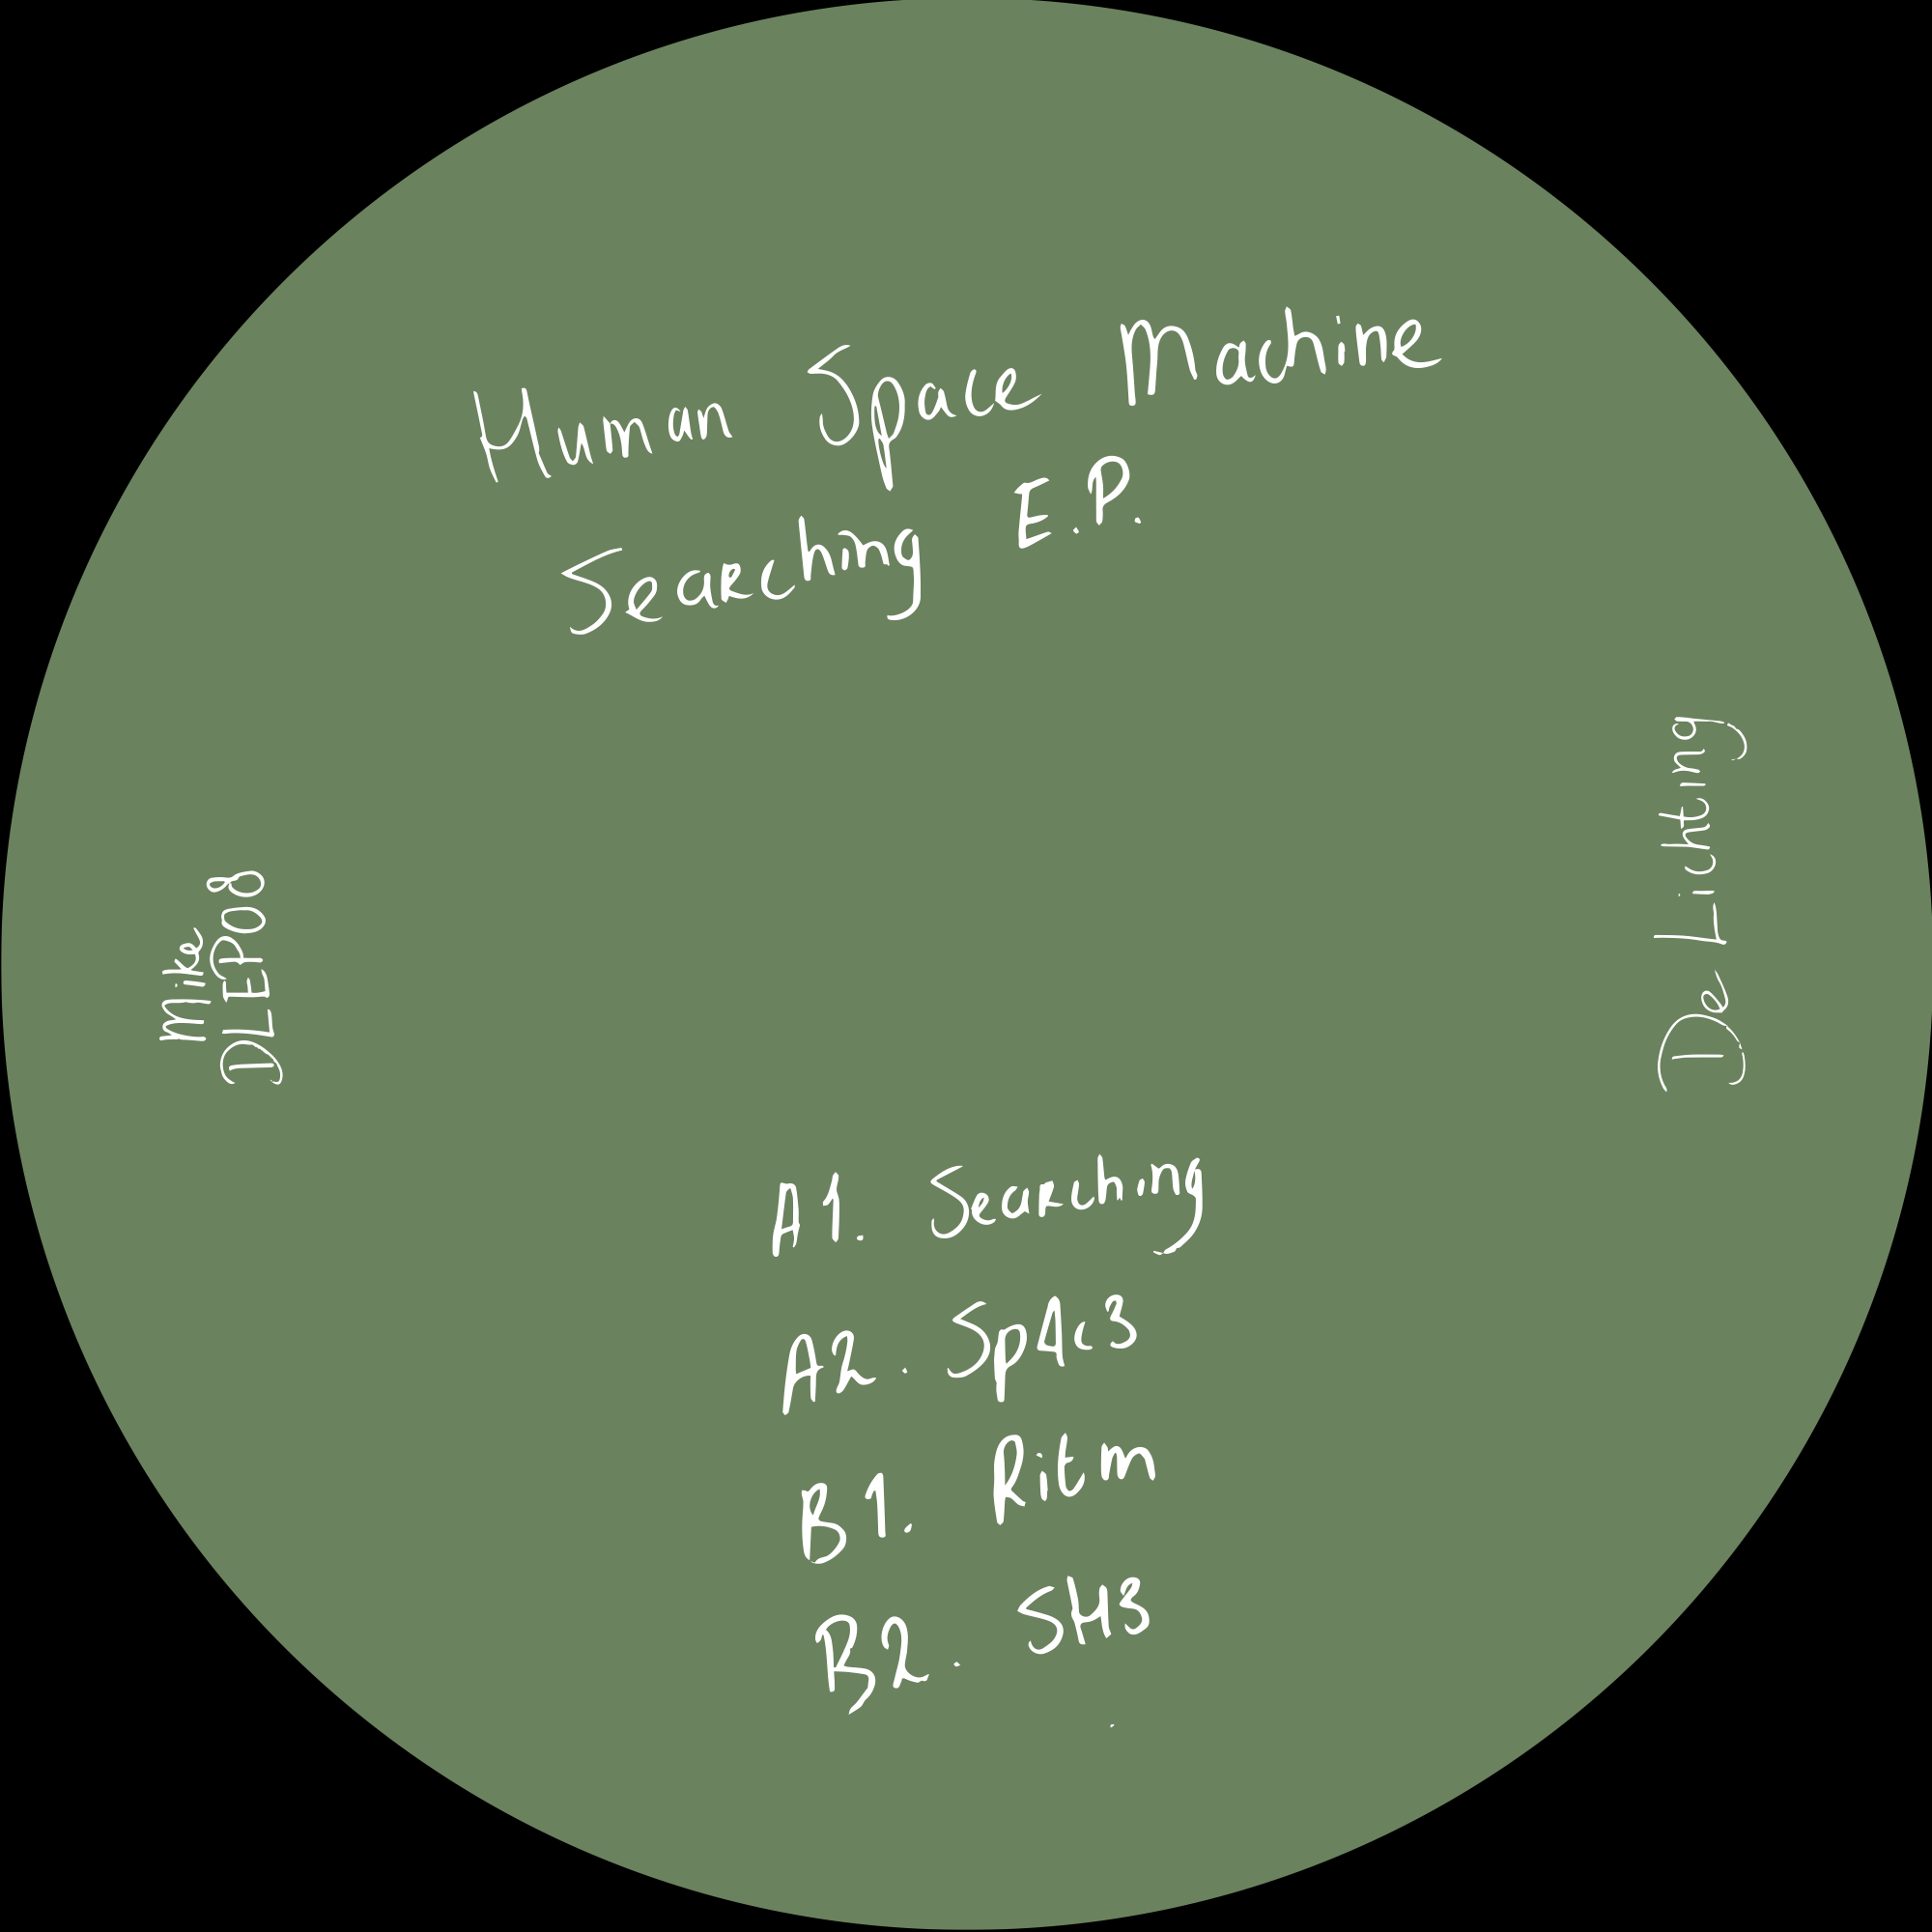 Human Space Machine - Searching EP